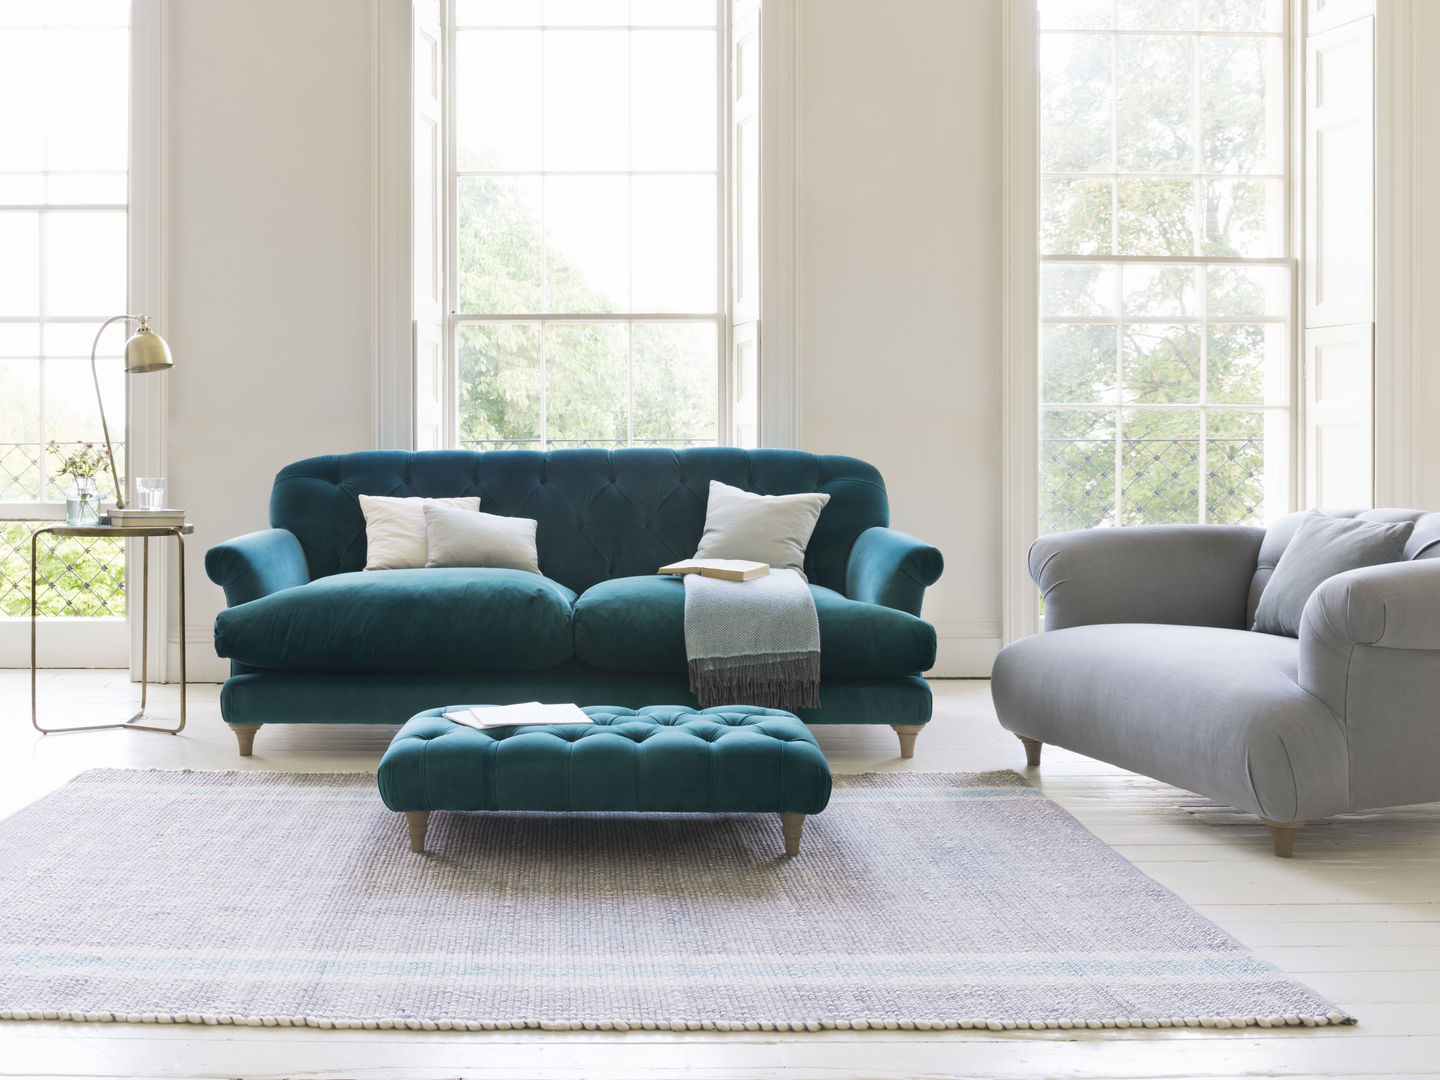 Comfty footstool Loaf Salas de estilo moderno footstool,teal,living room,sofa,space,windows,blue,velvet,green